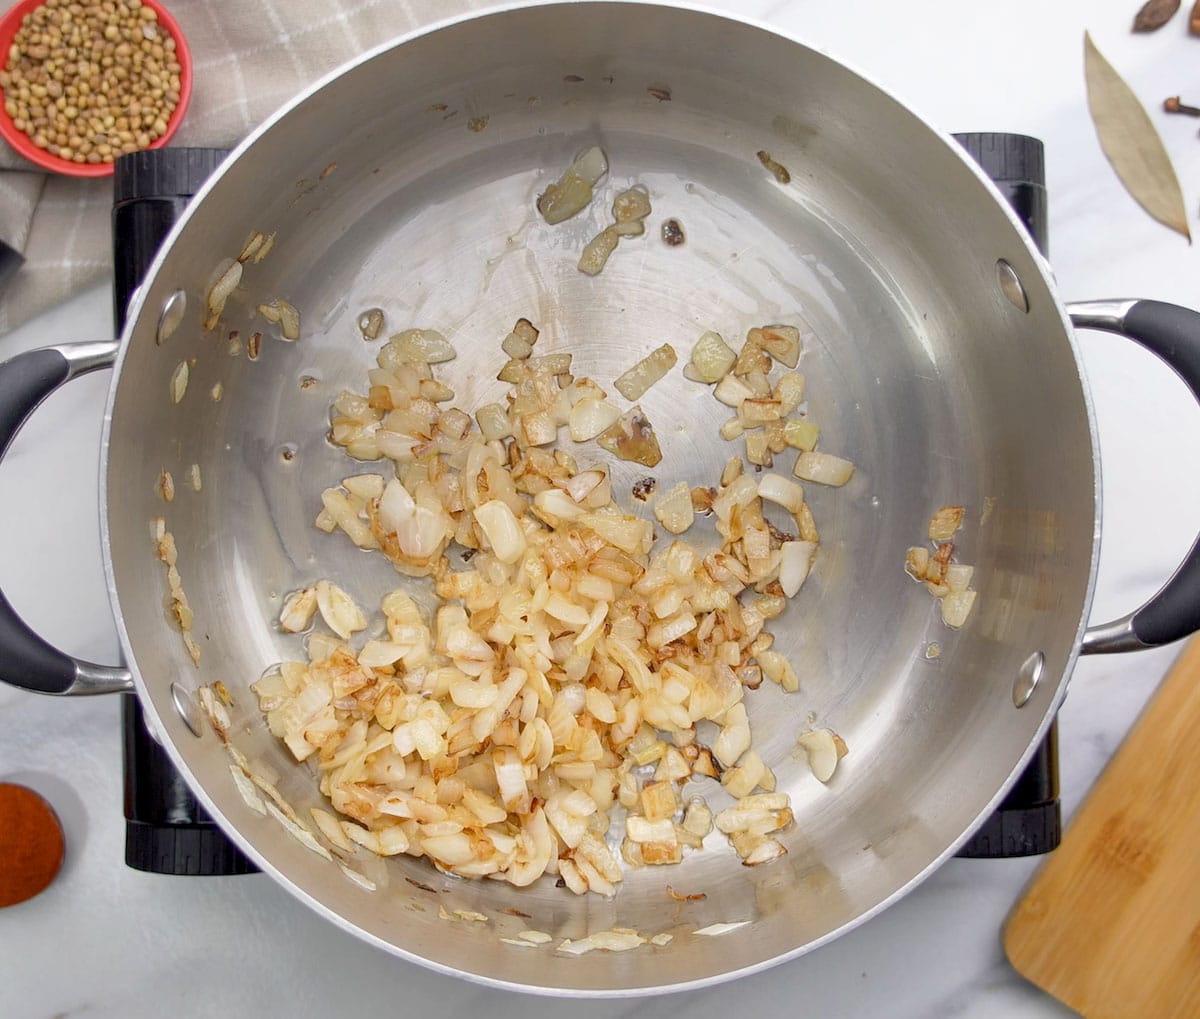 Saute onions to make puree